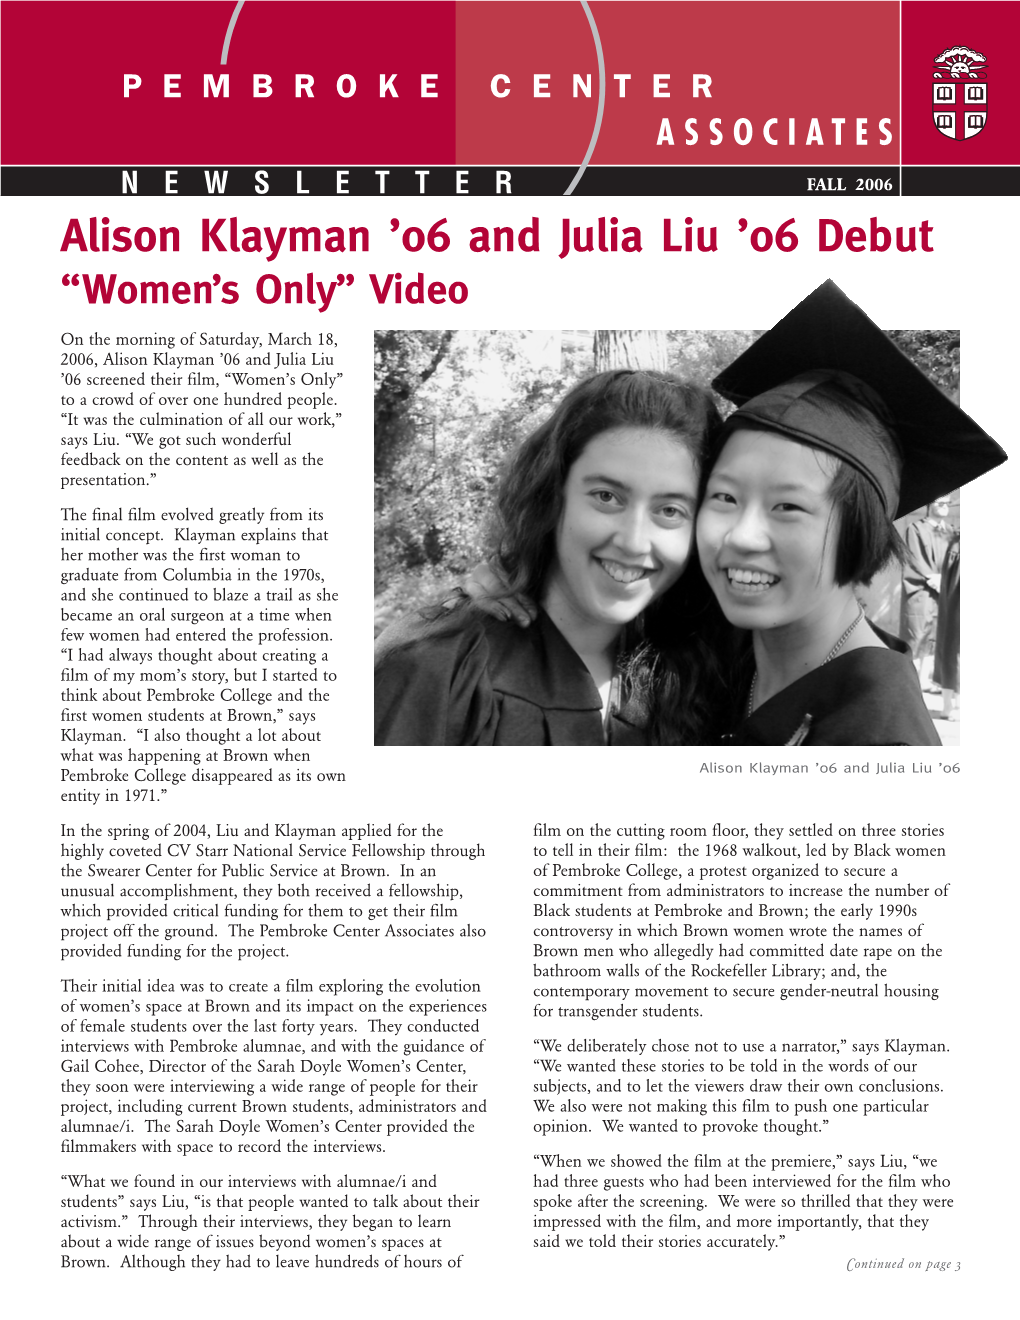 Alison Klayman ’06 and Julia Liu ’06 Debut “Women’S Only” Video